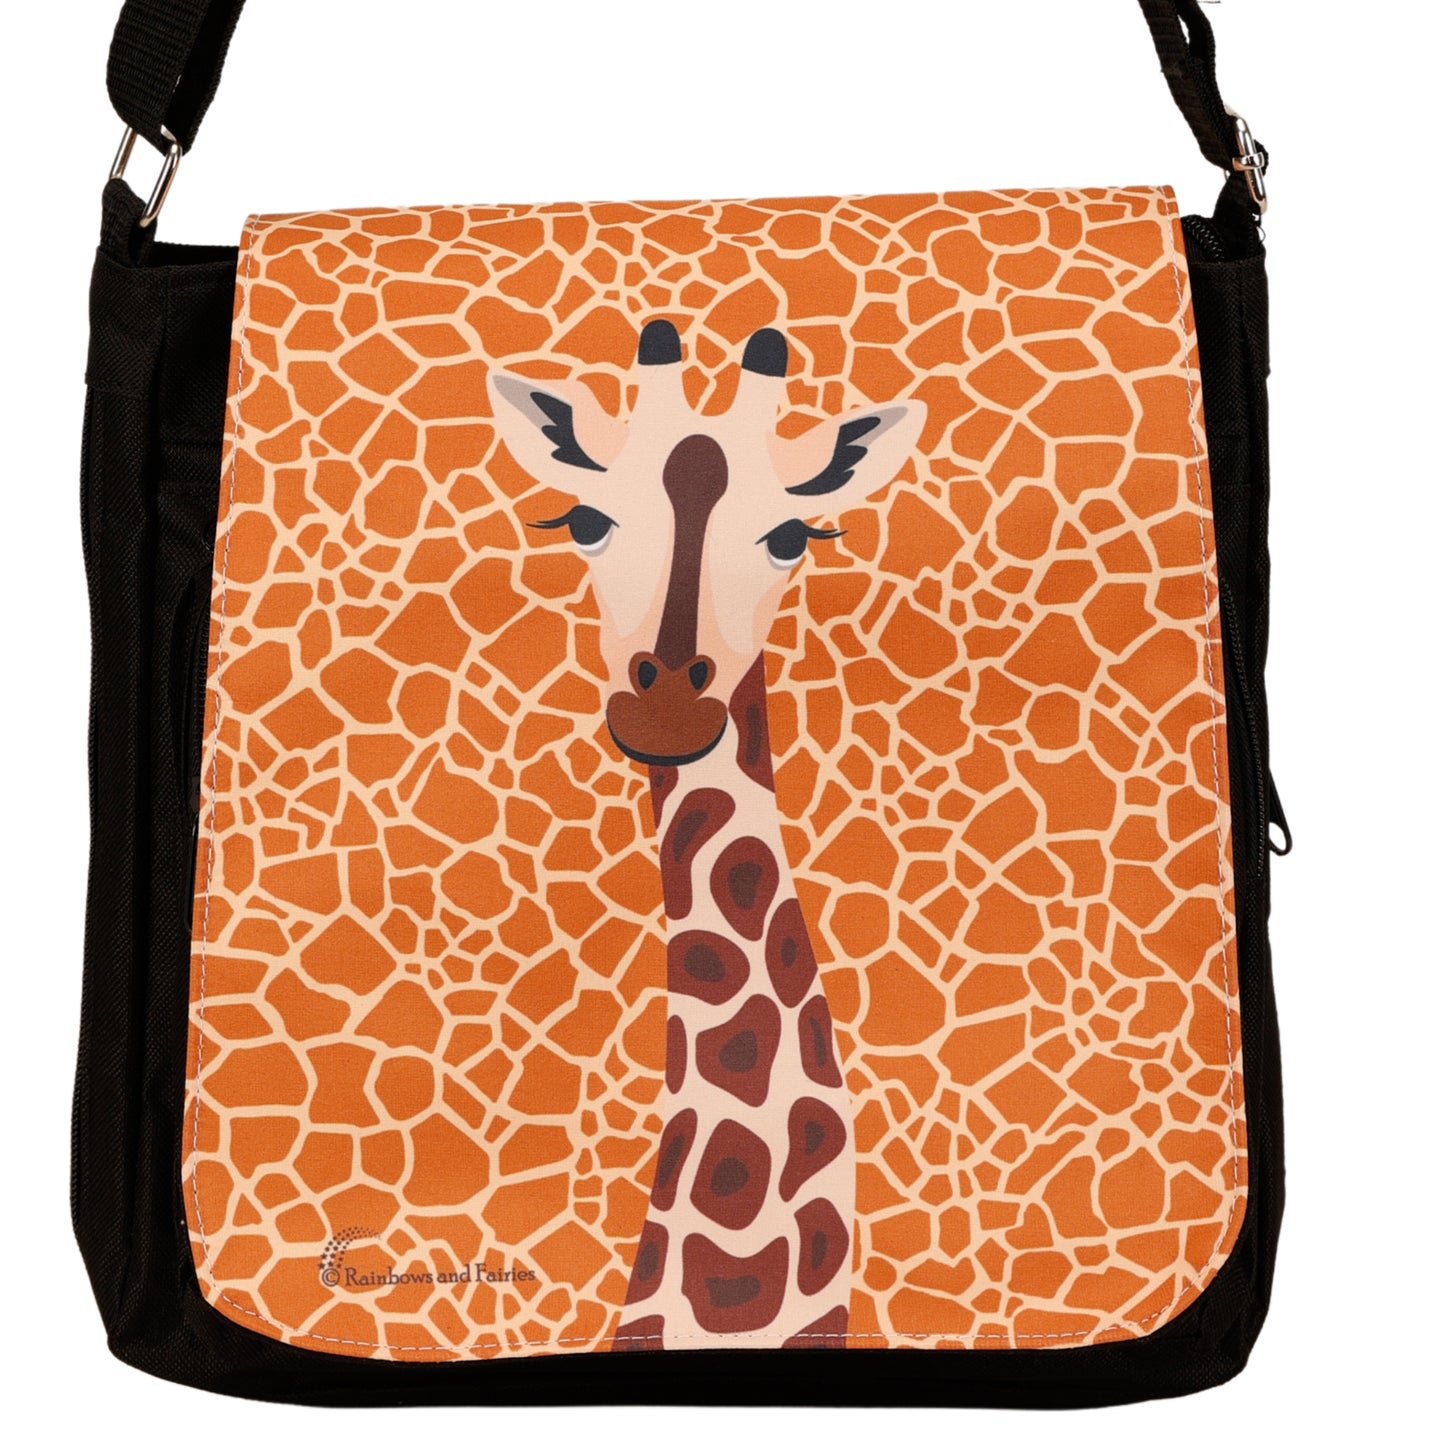 Andy Messenger Bag by RainbowsAndFairies.com.au (Giraffe - Animal Print - Jungle - Satchel Bag - Interchangeable Cover - Handbag - Vintage Inspired) - SKU: BG_SATCH_ANDYG_ORG - Pic-02